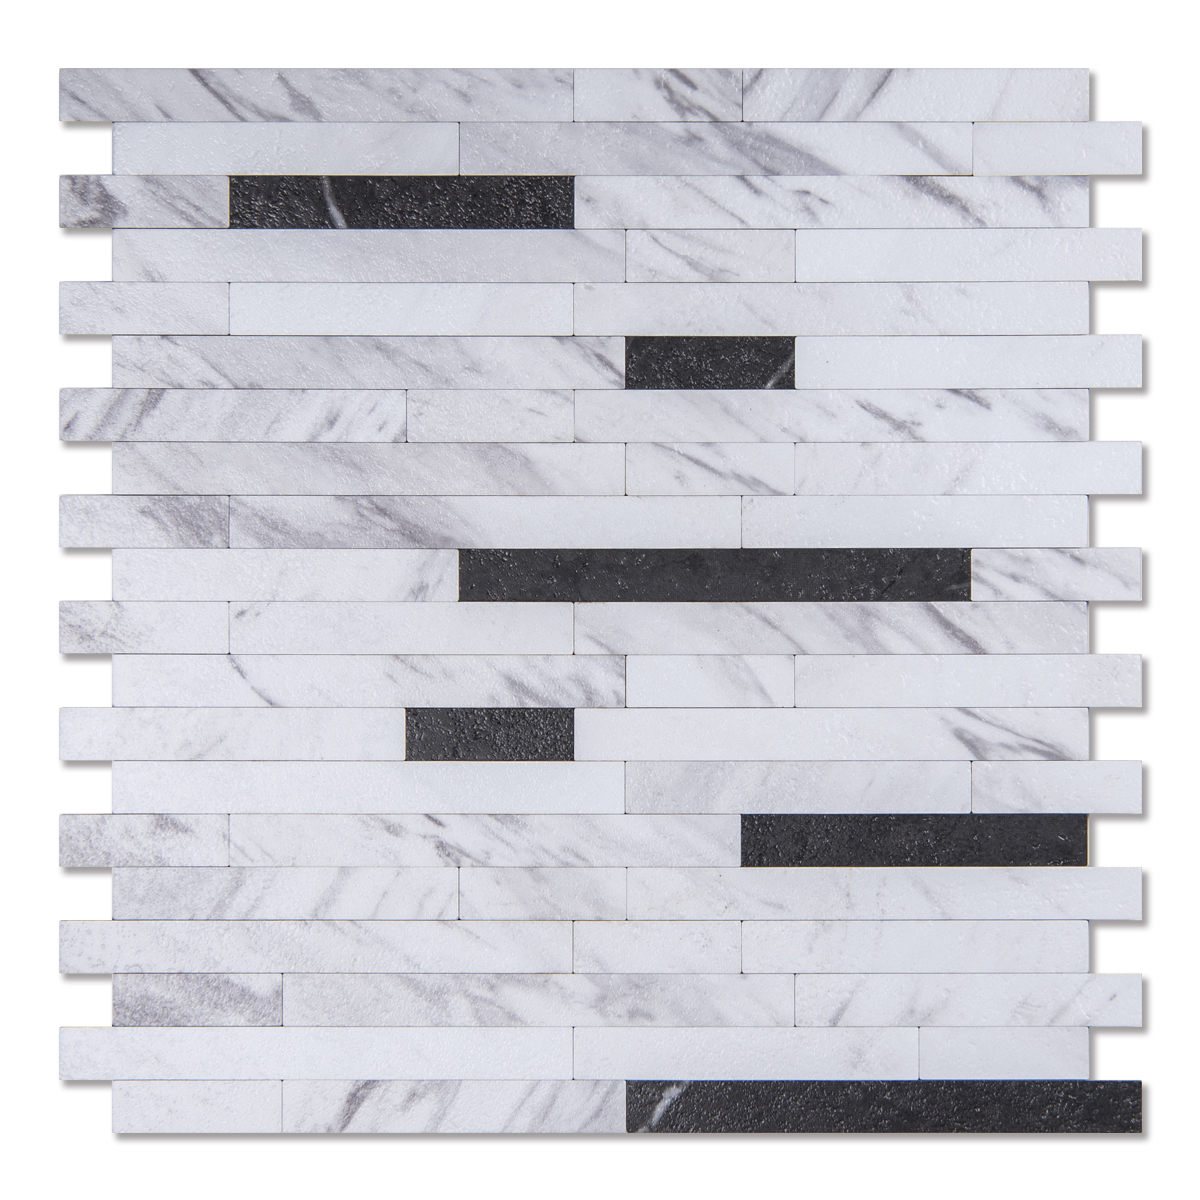 A16613-Art3d 10-Sheet Peel and Stick Stone Backsplash Tile for Kitchen, Bathroom - Volakas White Embellished with Metal Silver